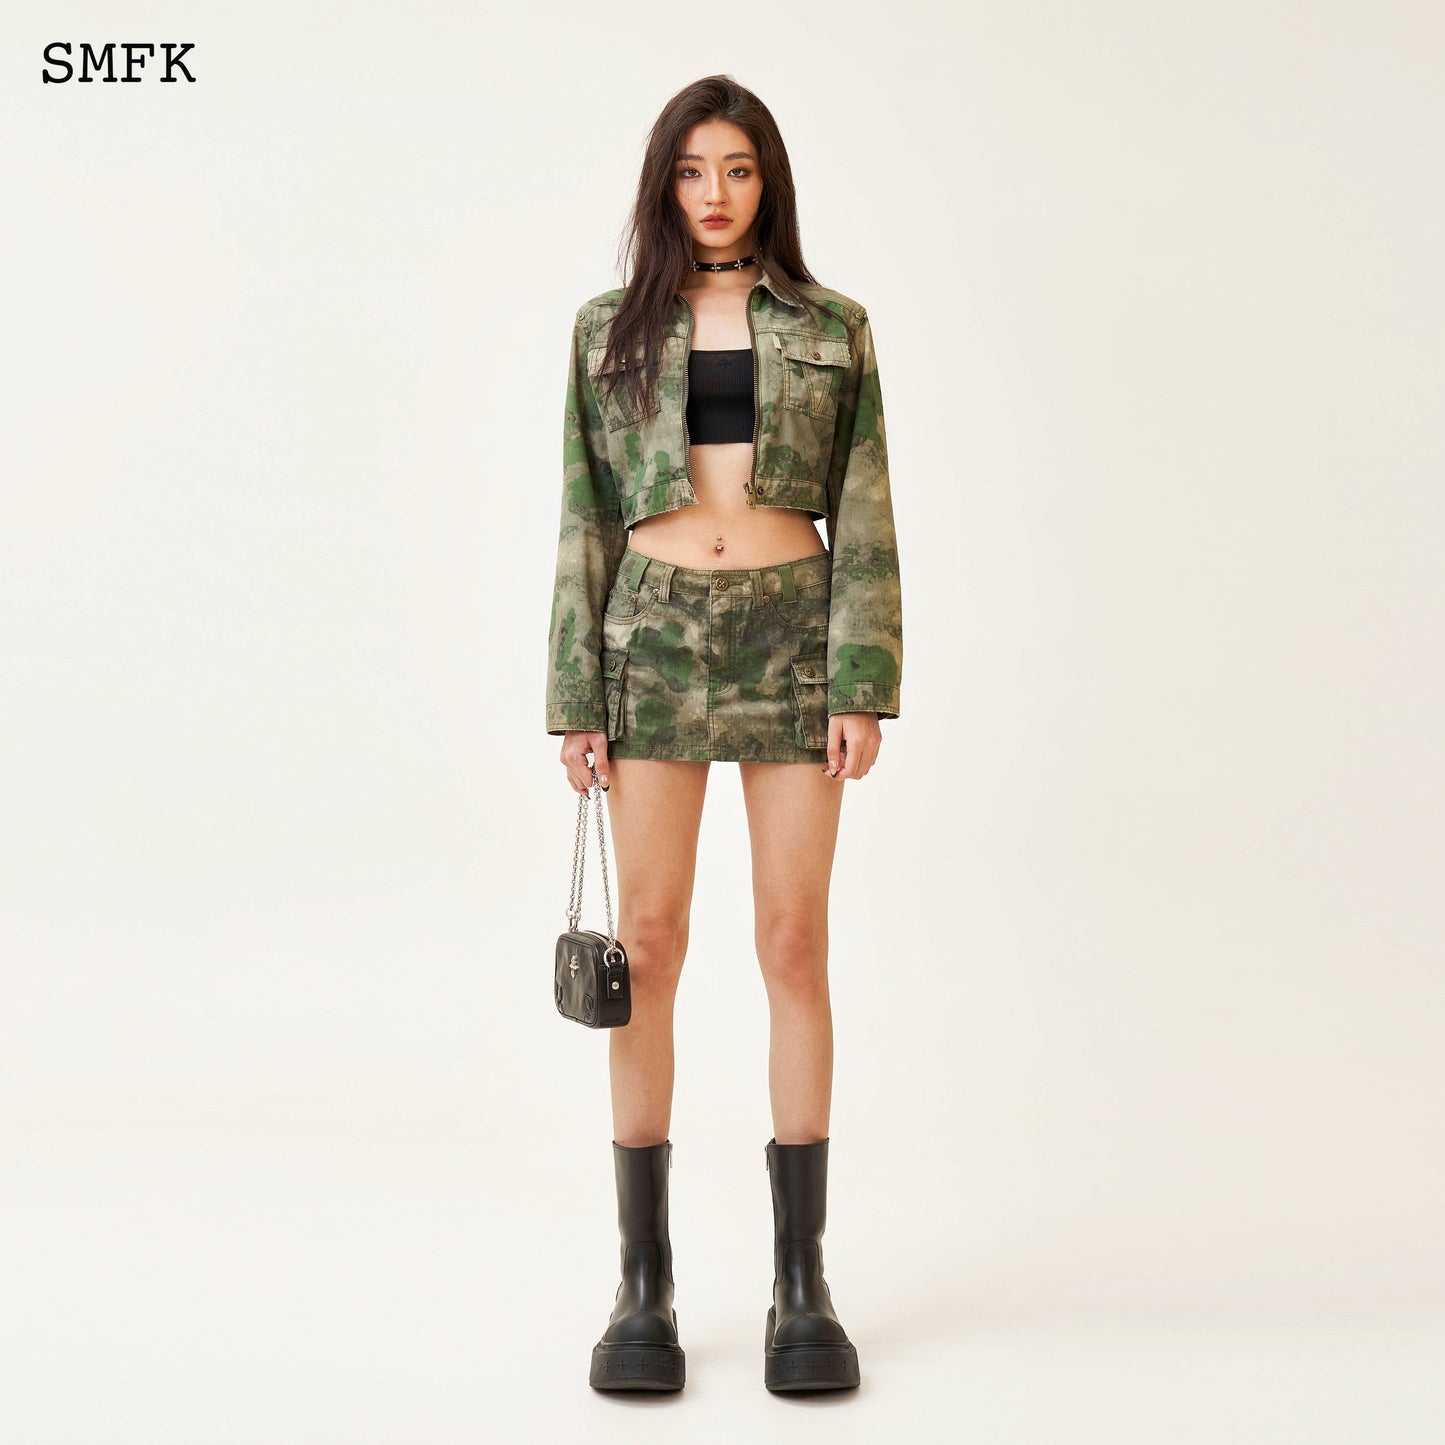 SMFK Compass Viper Green Camouflage Workwear Mini Skirt